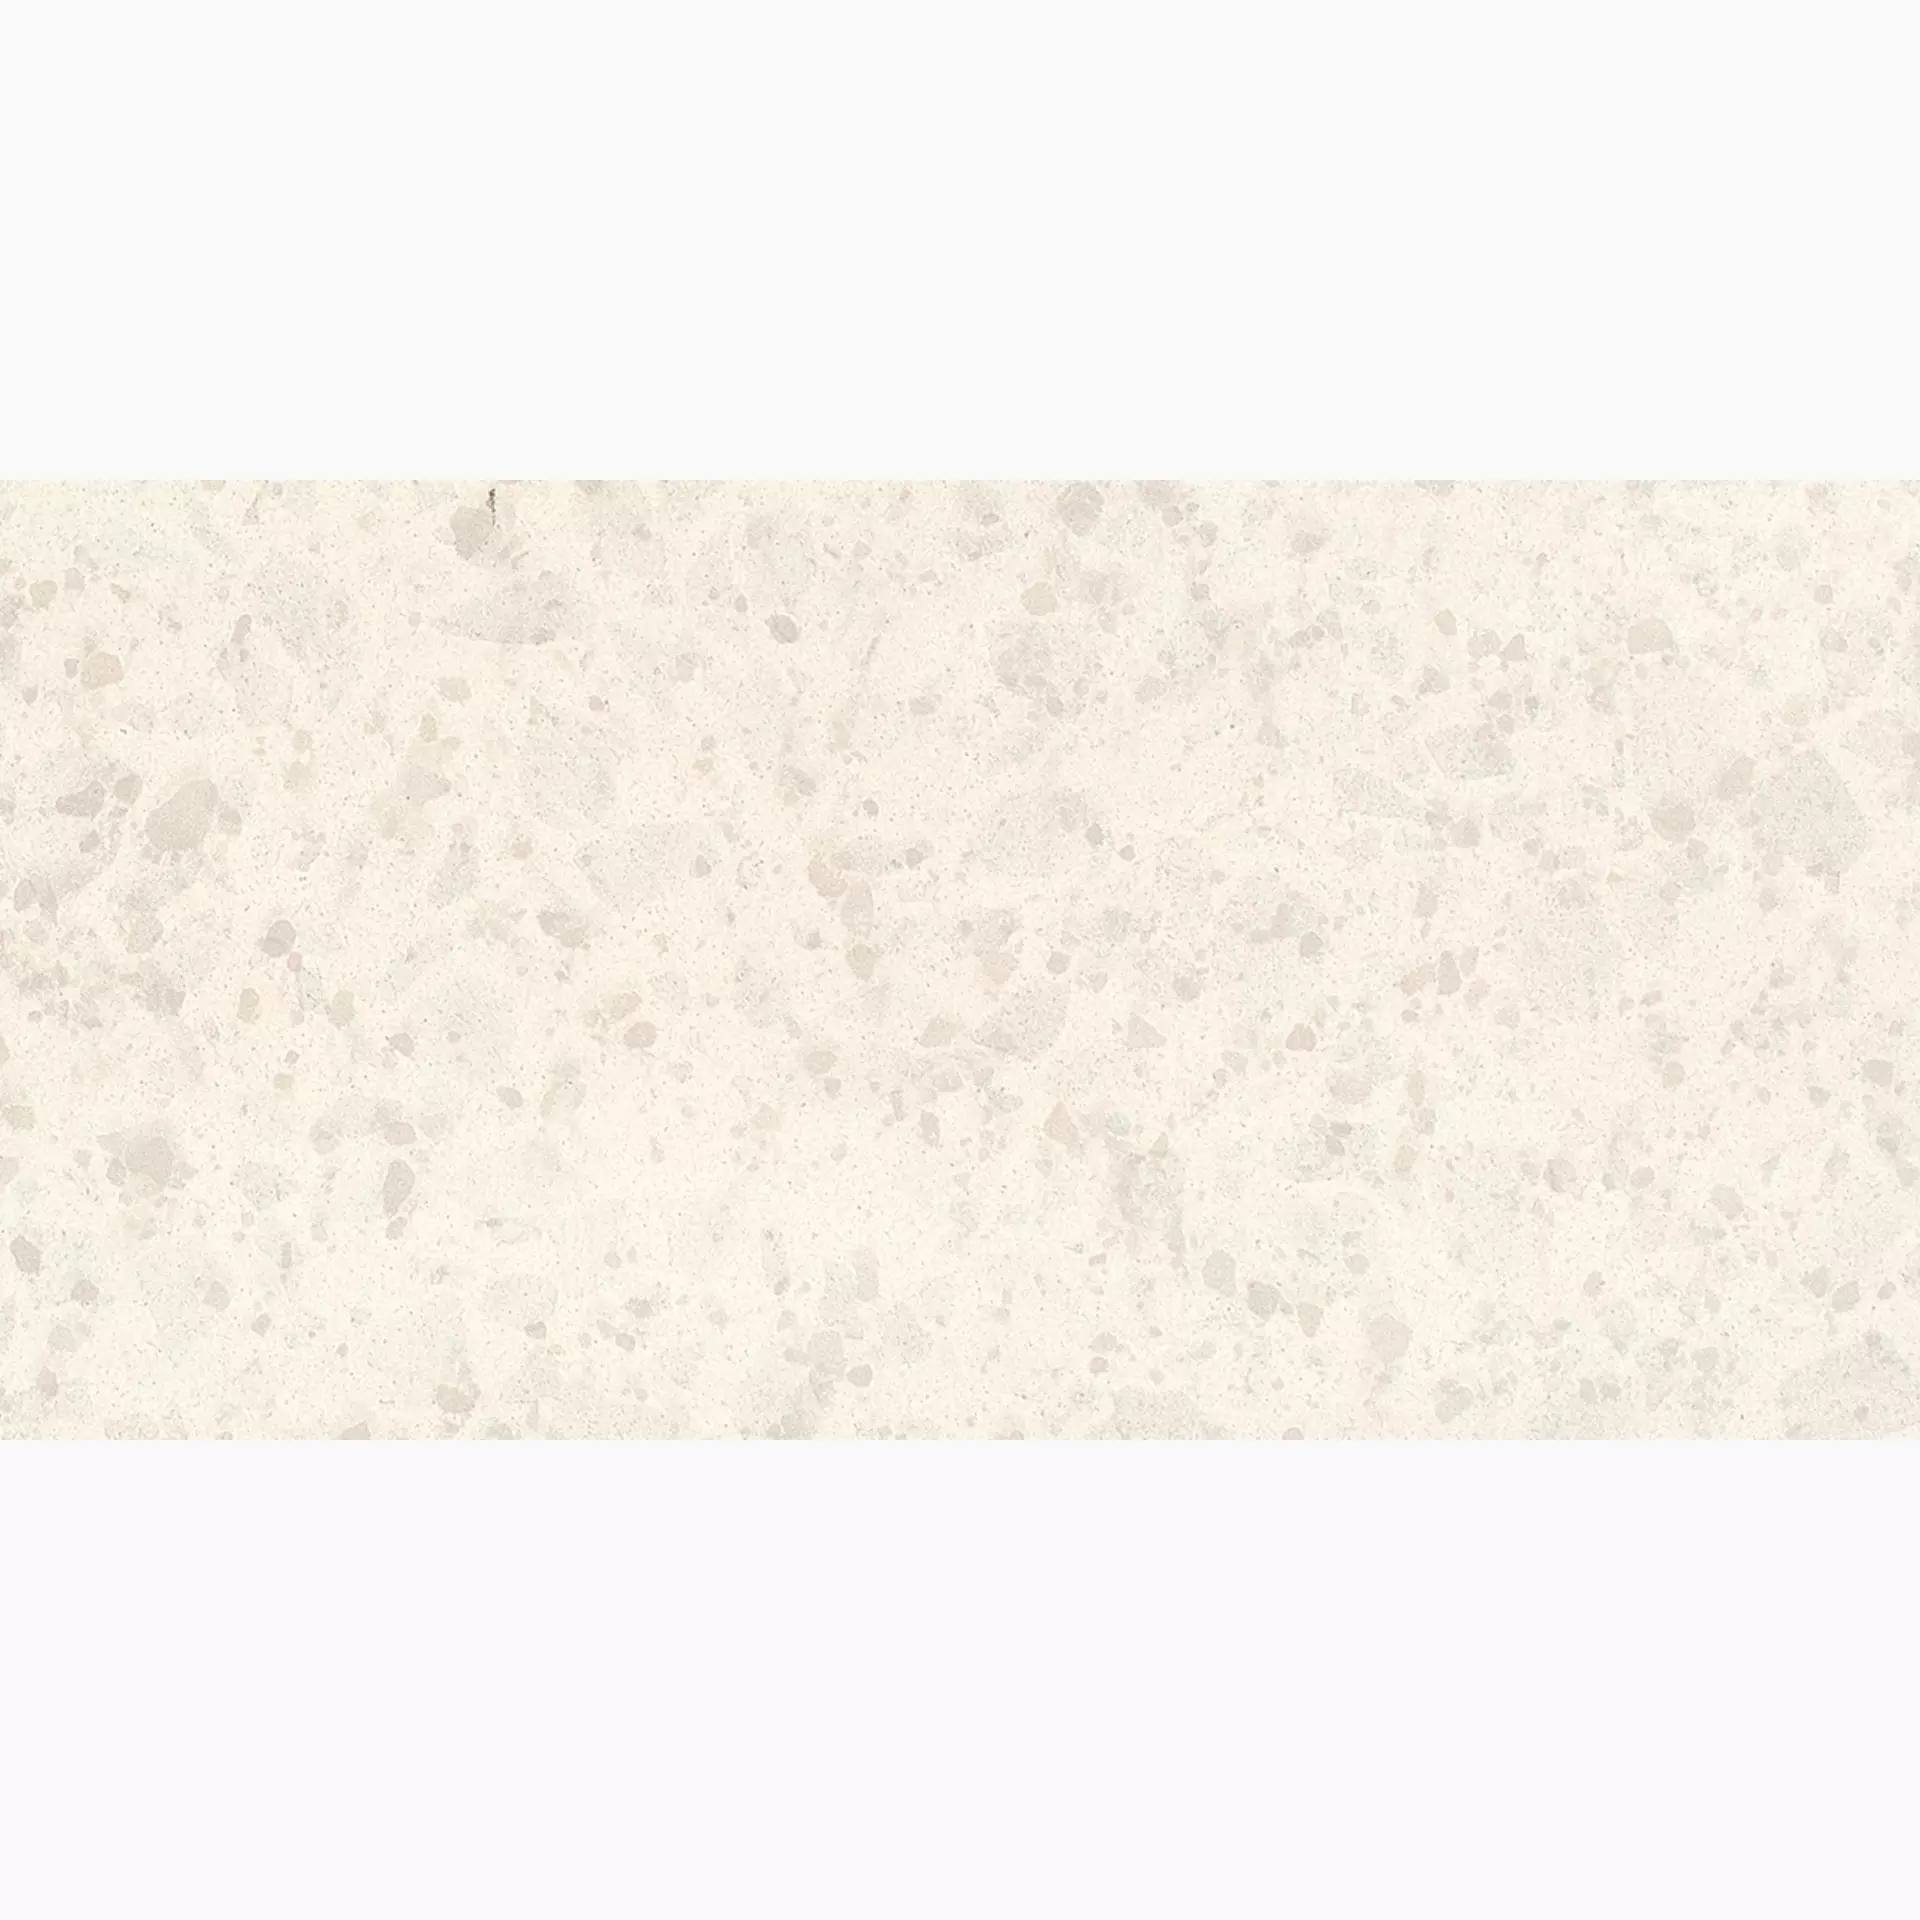 Gigacer Inclusioni Soave Bianco Perla Soft 12INCL3060BIAPERSOFT 30x60cm 12mm